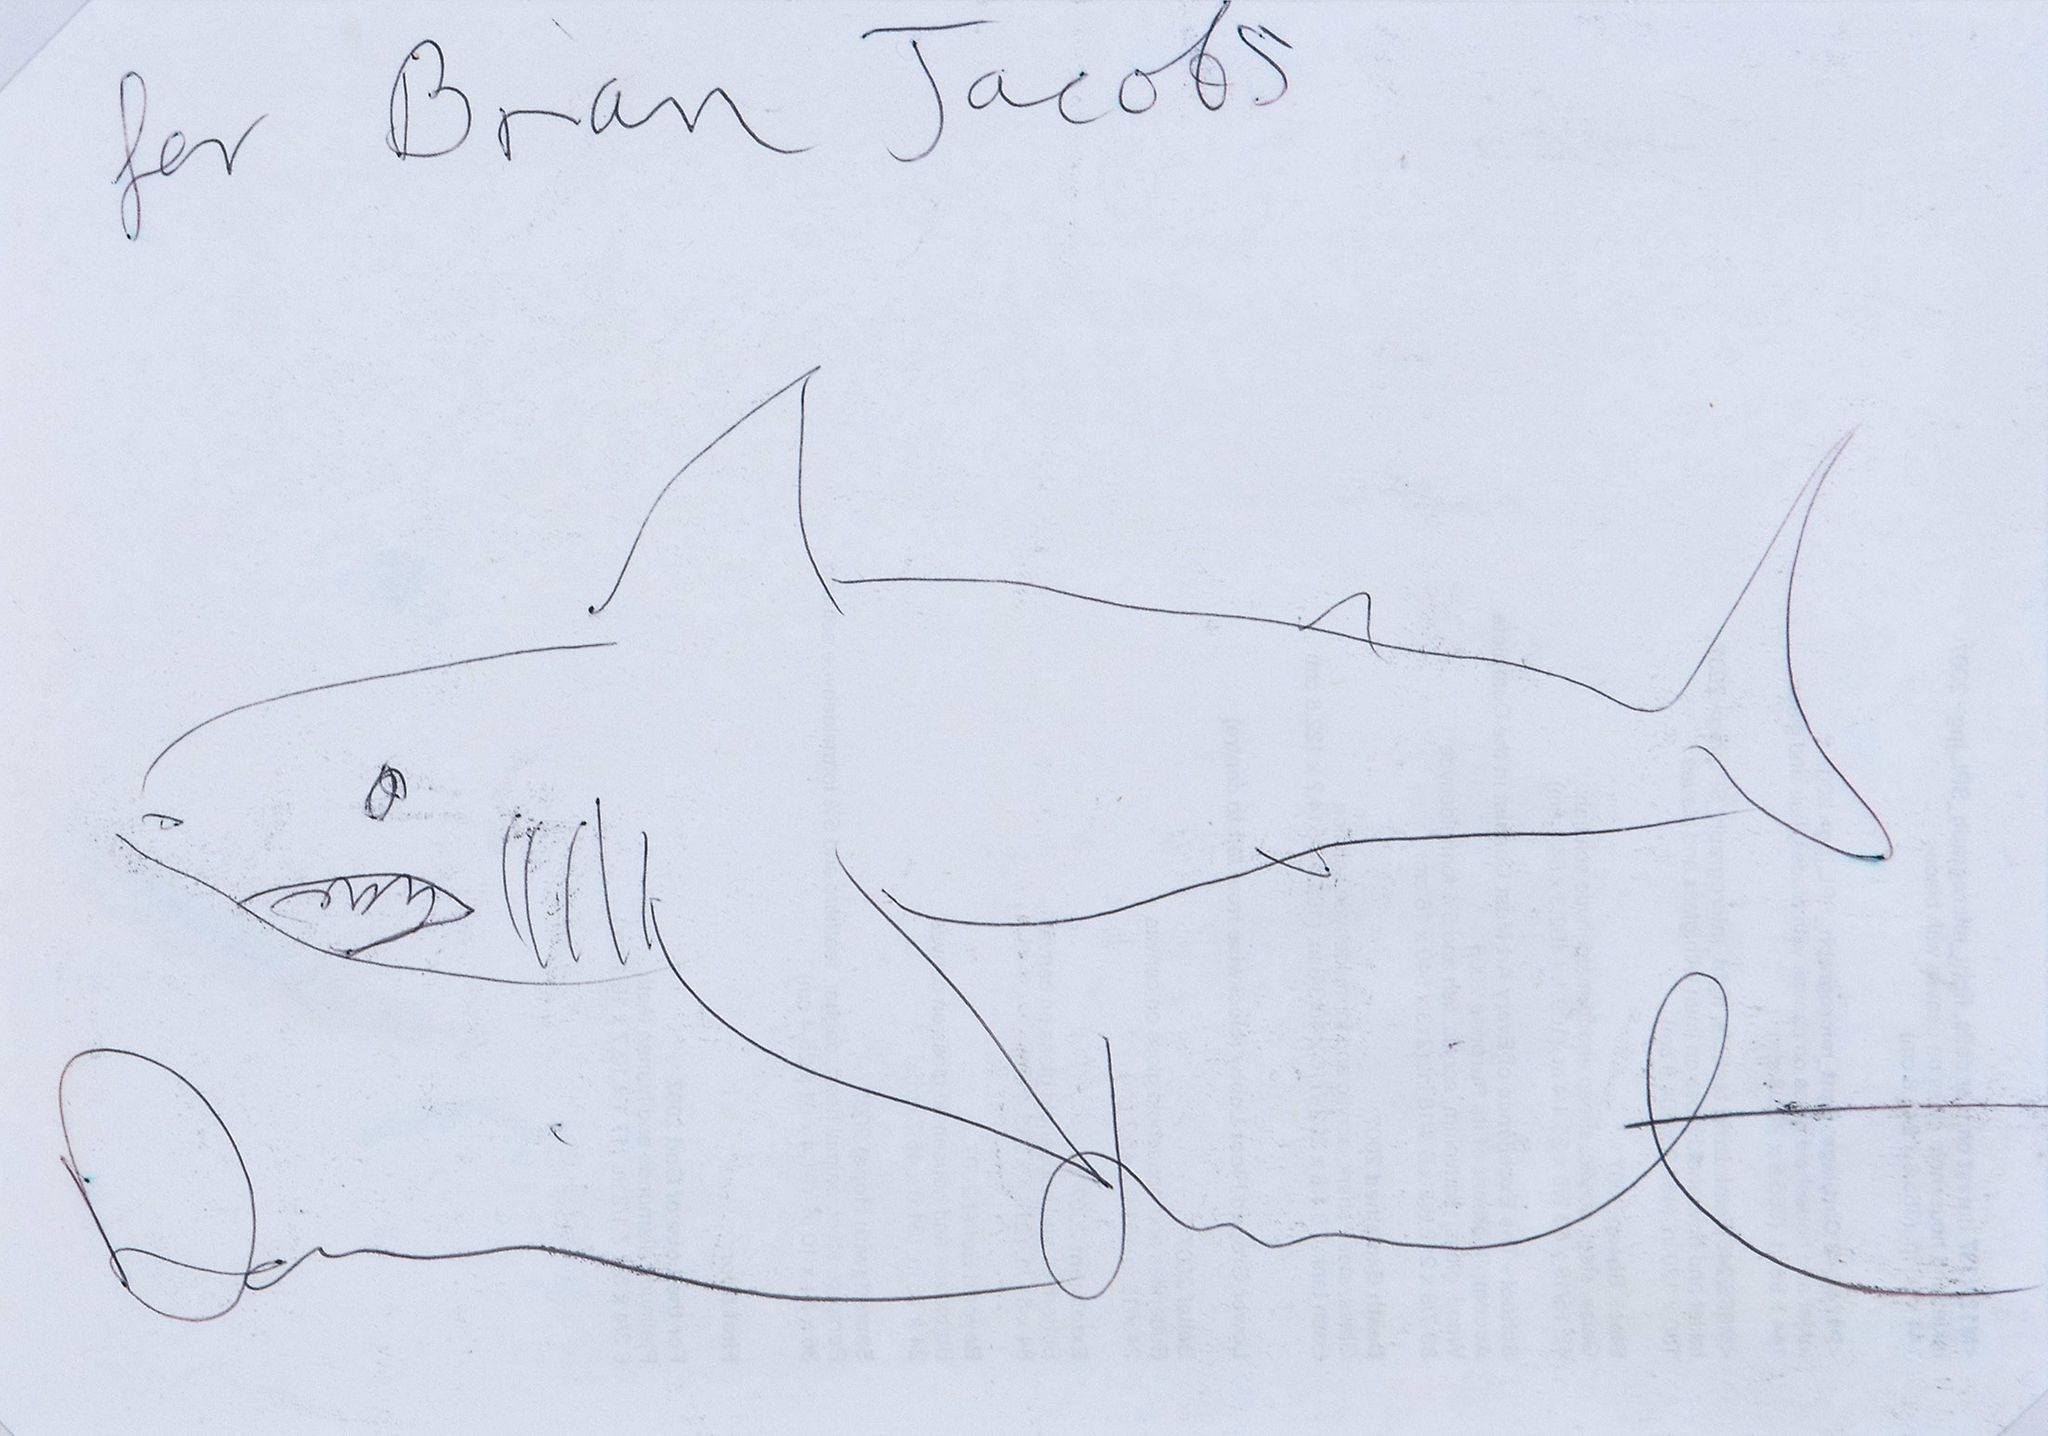 Shark by Damien Hirst, circa 2007